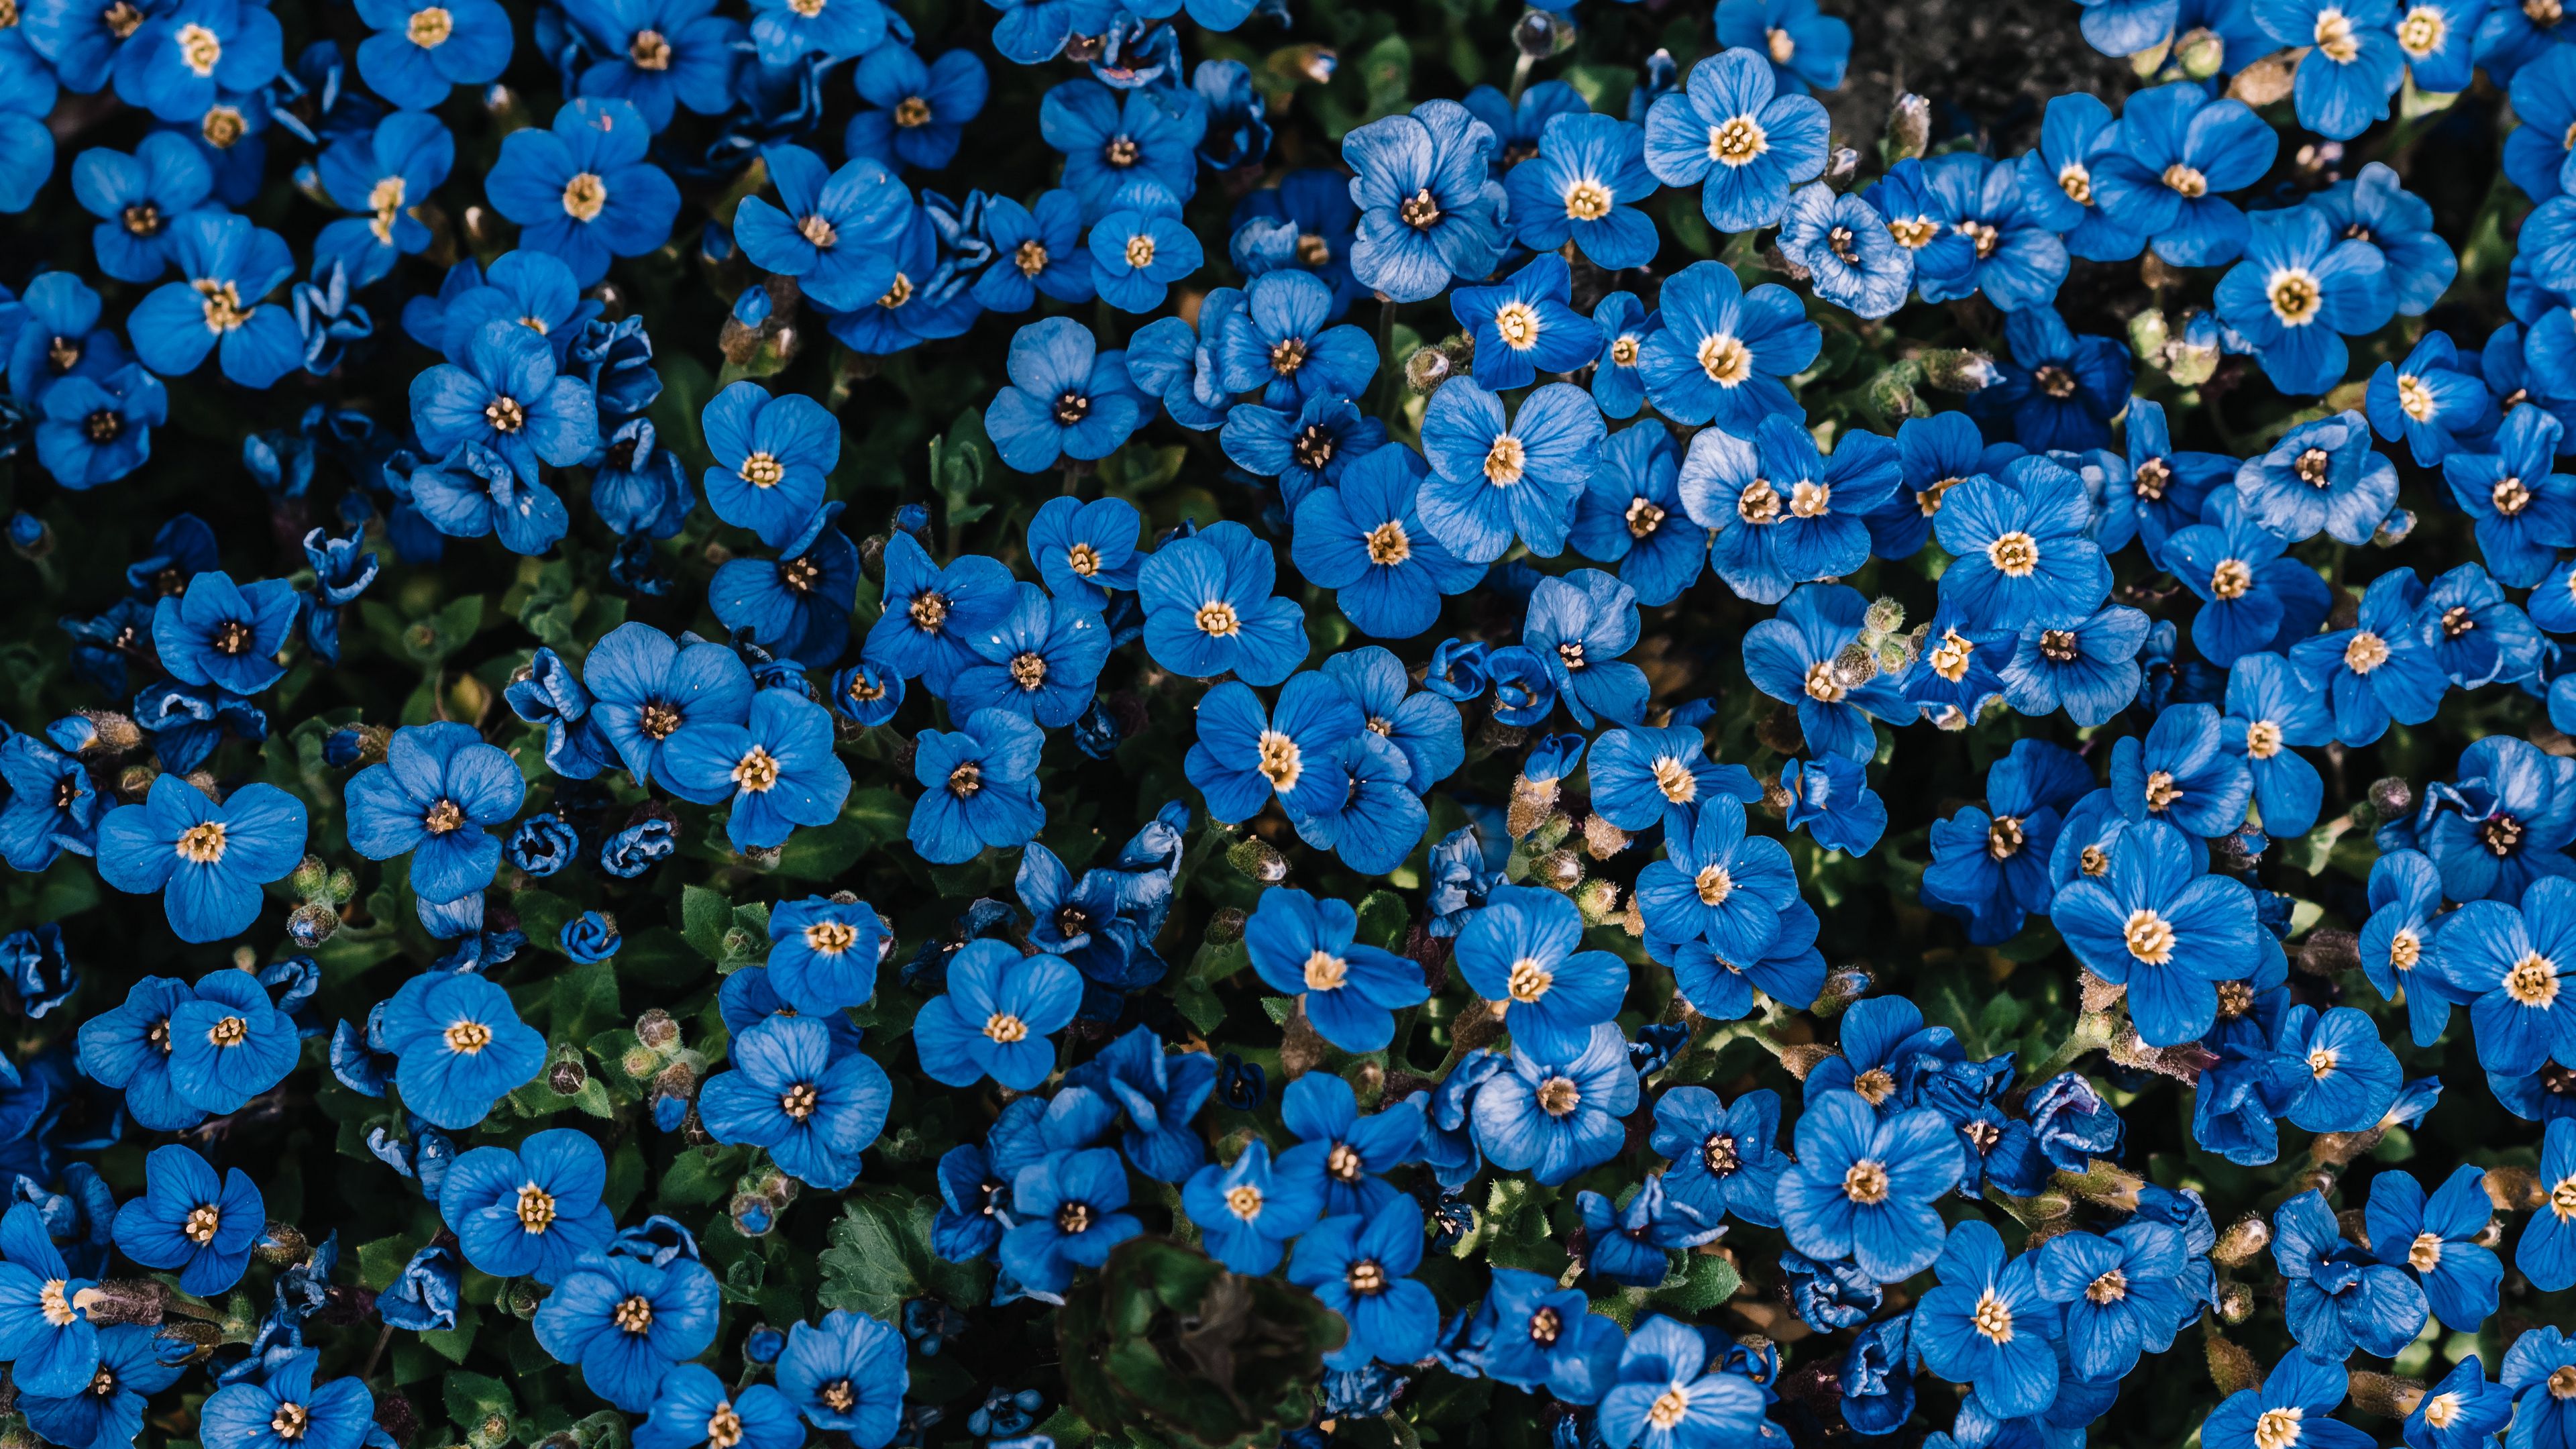 Download wallpaper 3840x2160 flowers, blue, bloom, plant, decorative 4k uhd 16:9 hd background